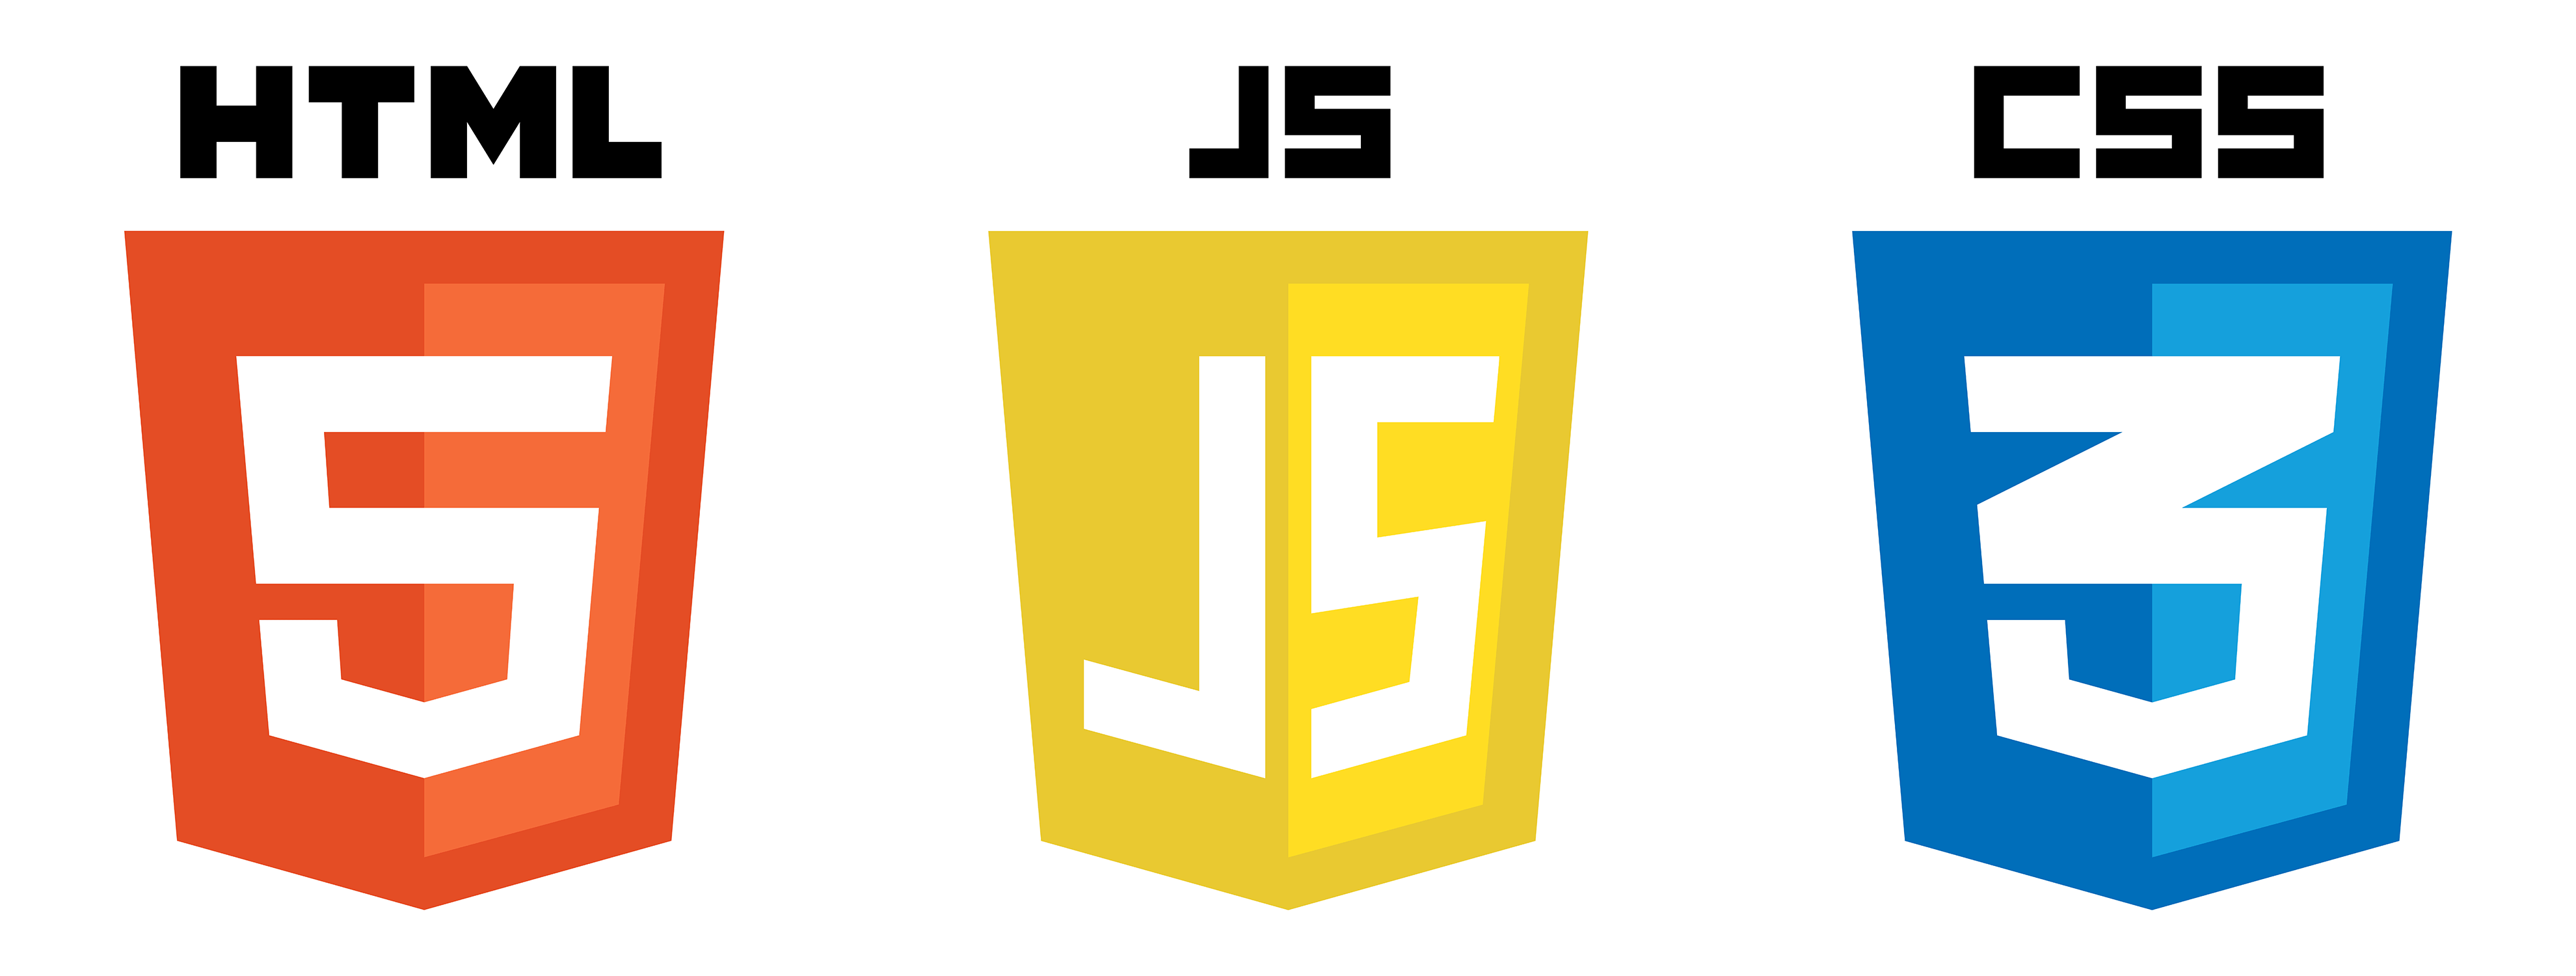 JavaScript Logo - Javascript logo png 9 PNG Image